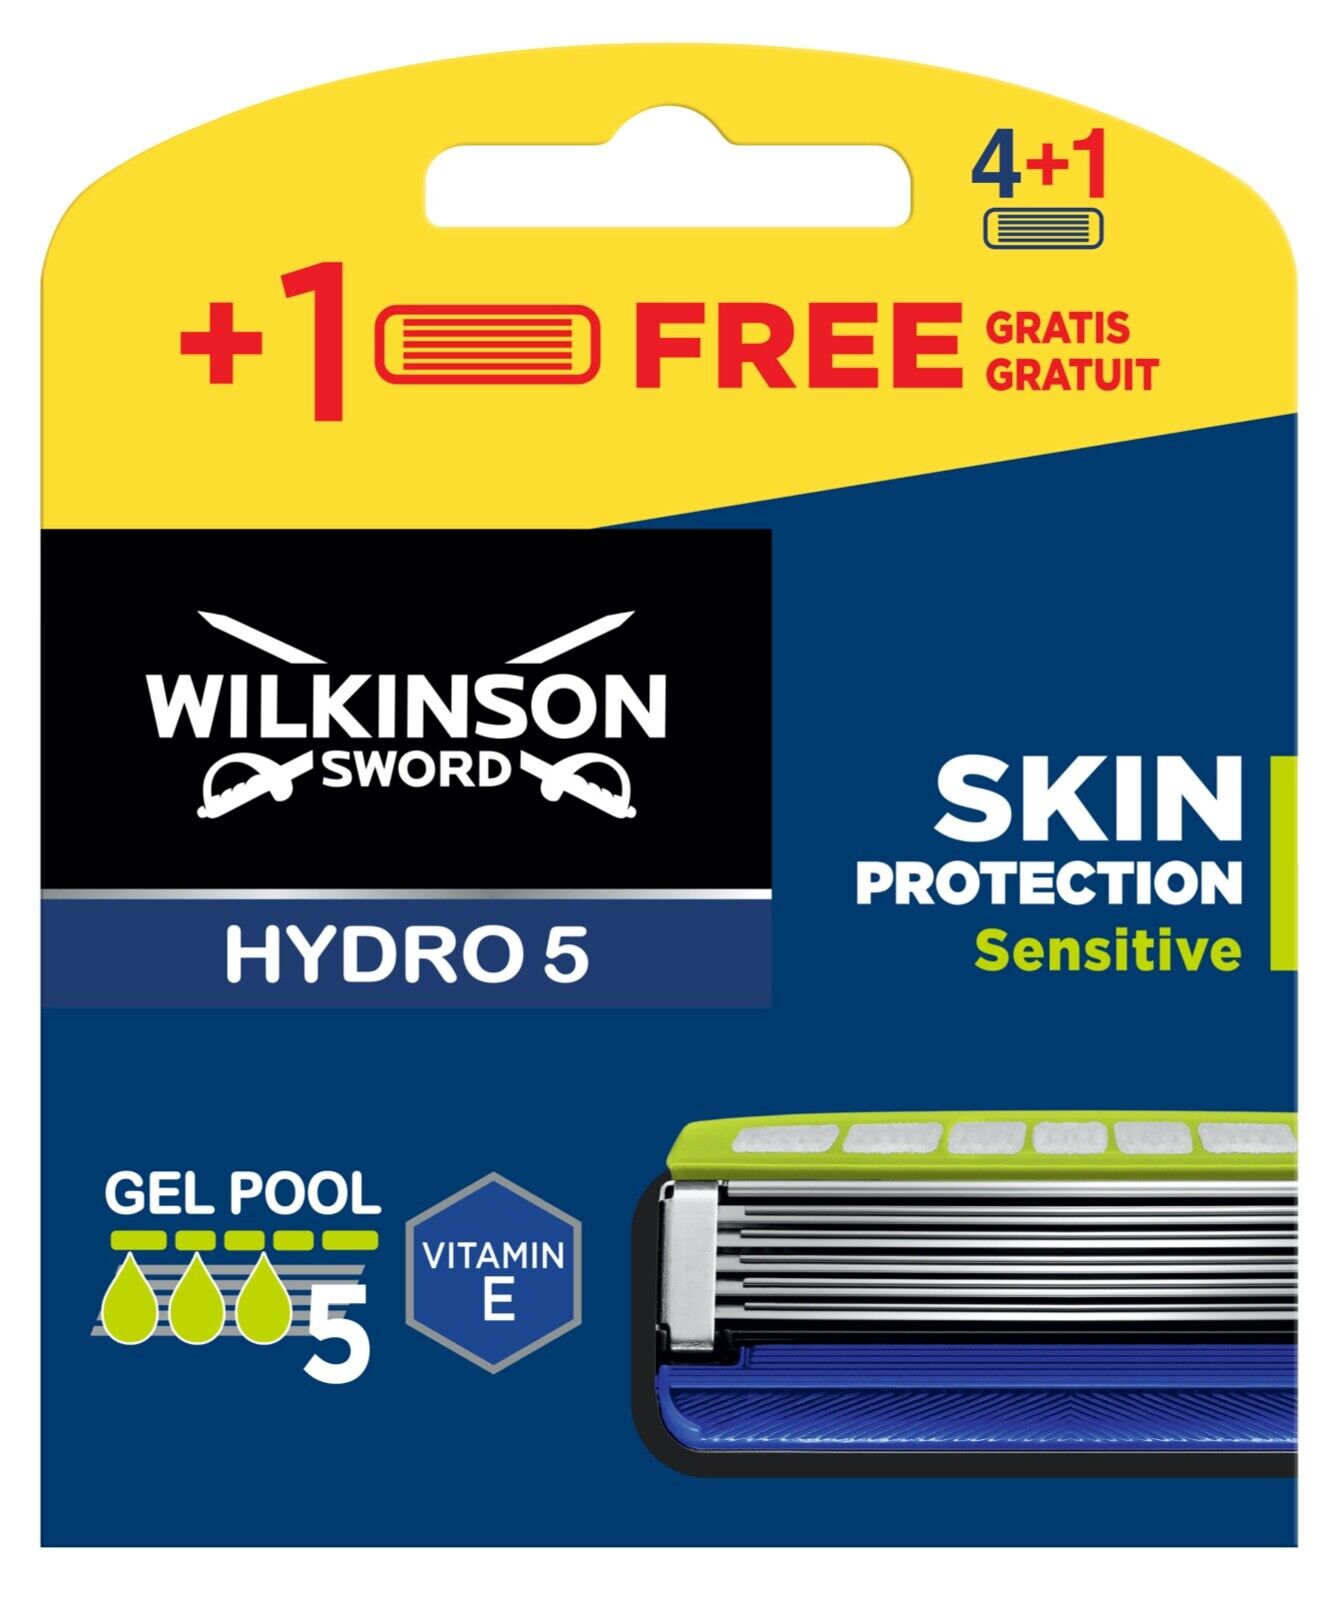 Сменные кассеты для бритвы Hydro Wilkinson Sword Hydro5 SKIN PROTECTION SENSITIVE, 5 шт. сменные кассеты для бритв sense wilkinson sword hydro 5 skin premiun edition 4 шт